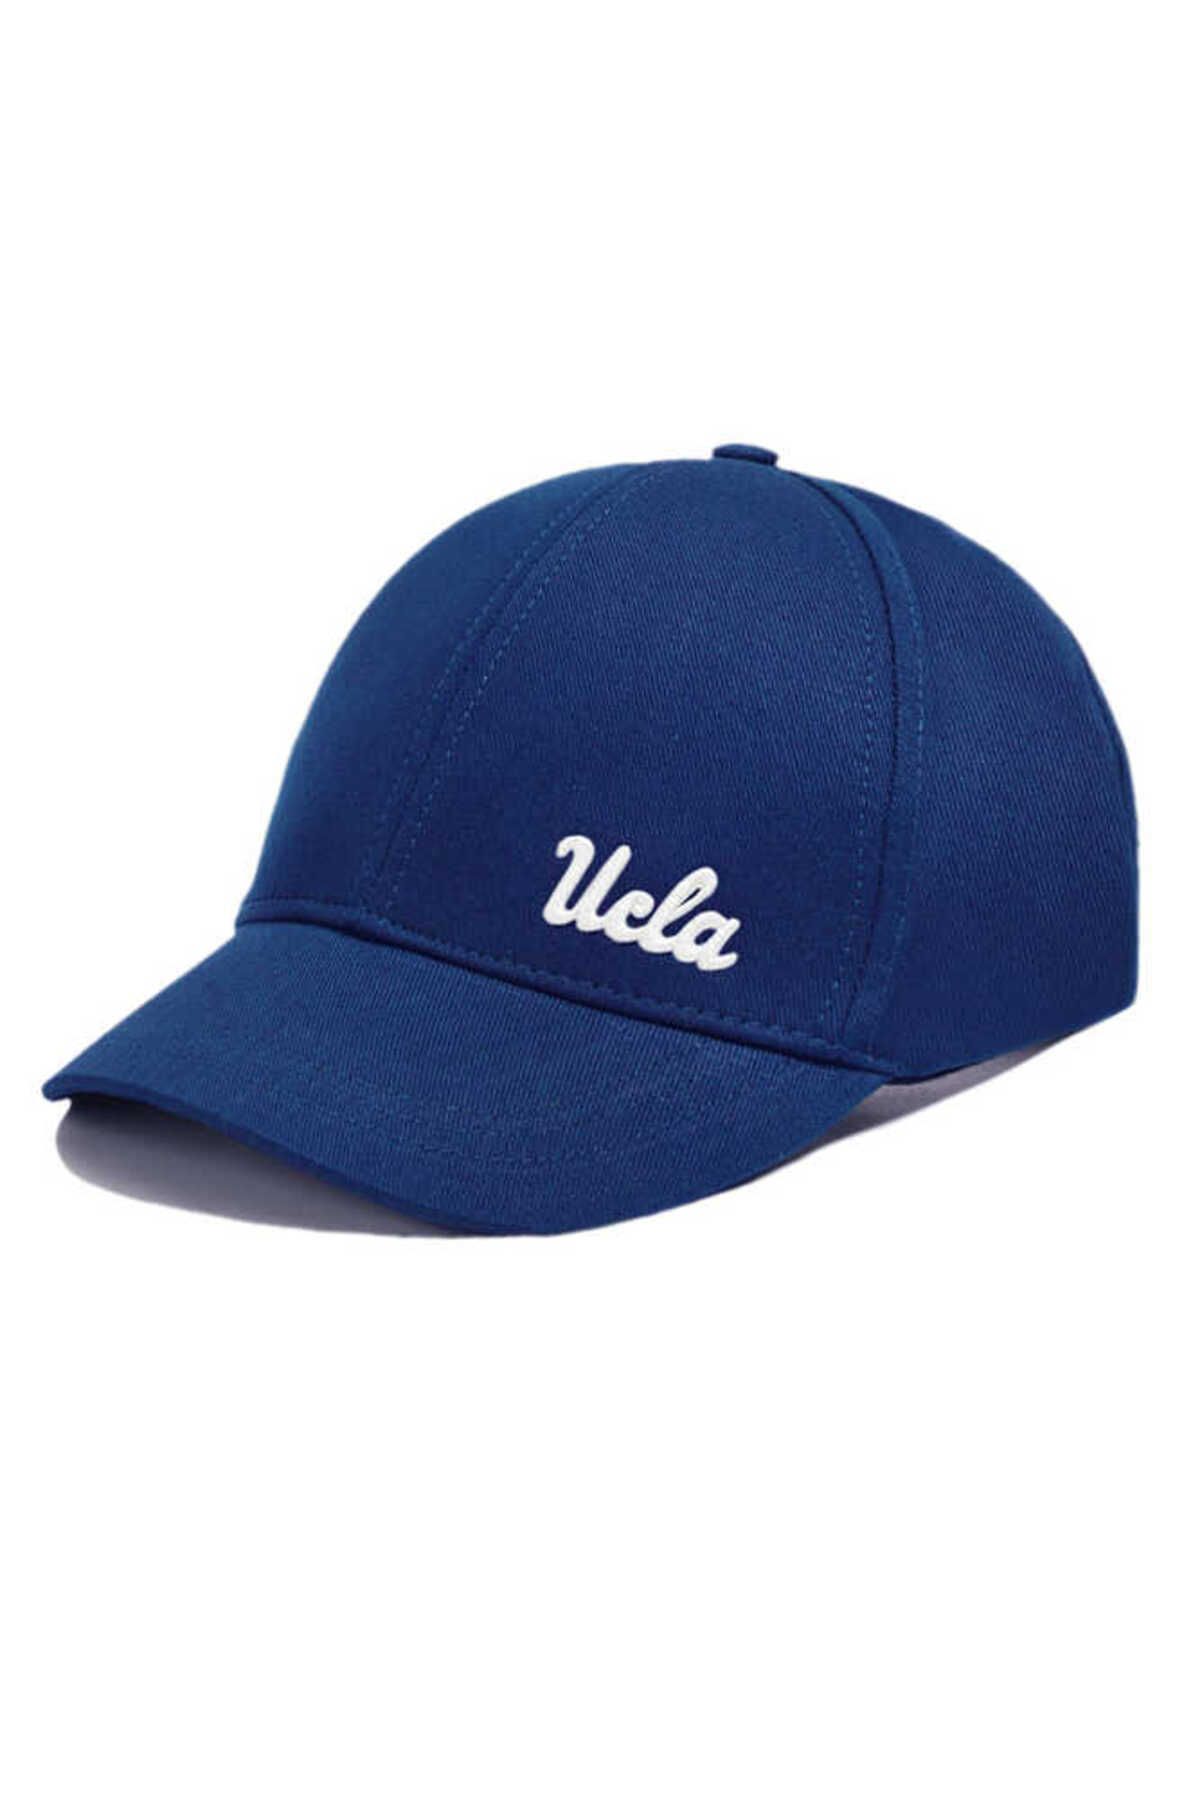 Ucla Jenner Lacivert Baseball Cap Nakışlı Şapka